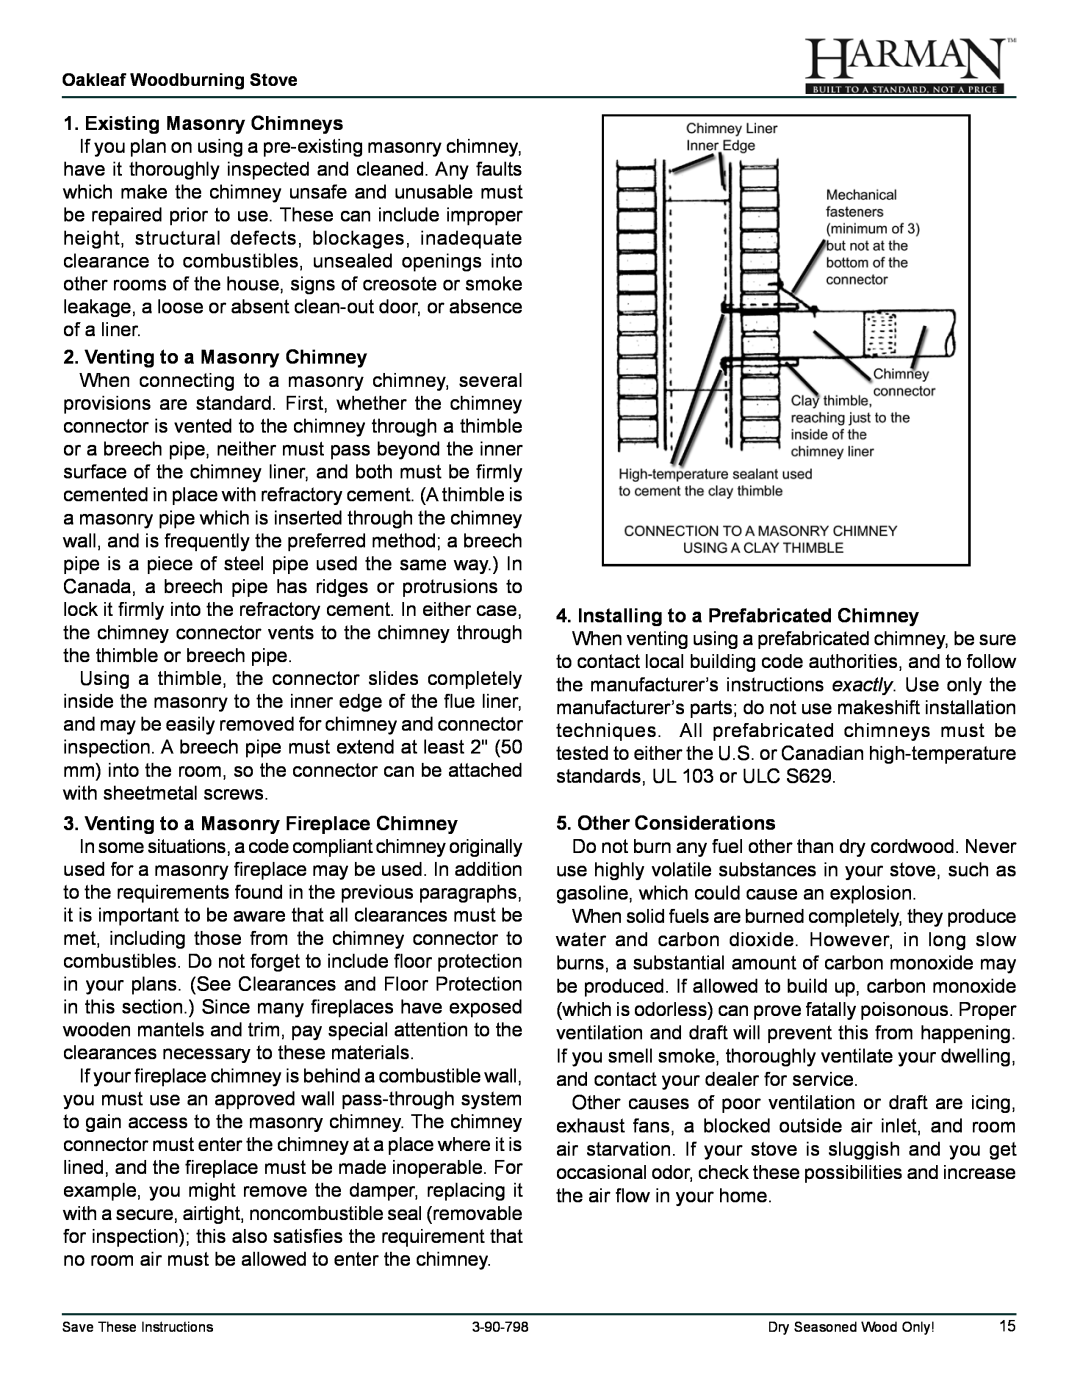 Harman Stove Company 1-90-79700 owner manual Existing Masonry Chimneys, Venting to a Masonry Chimney, Other Considerations 